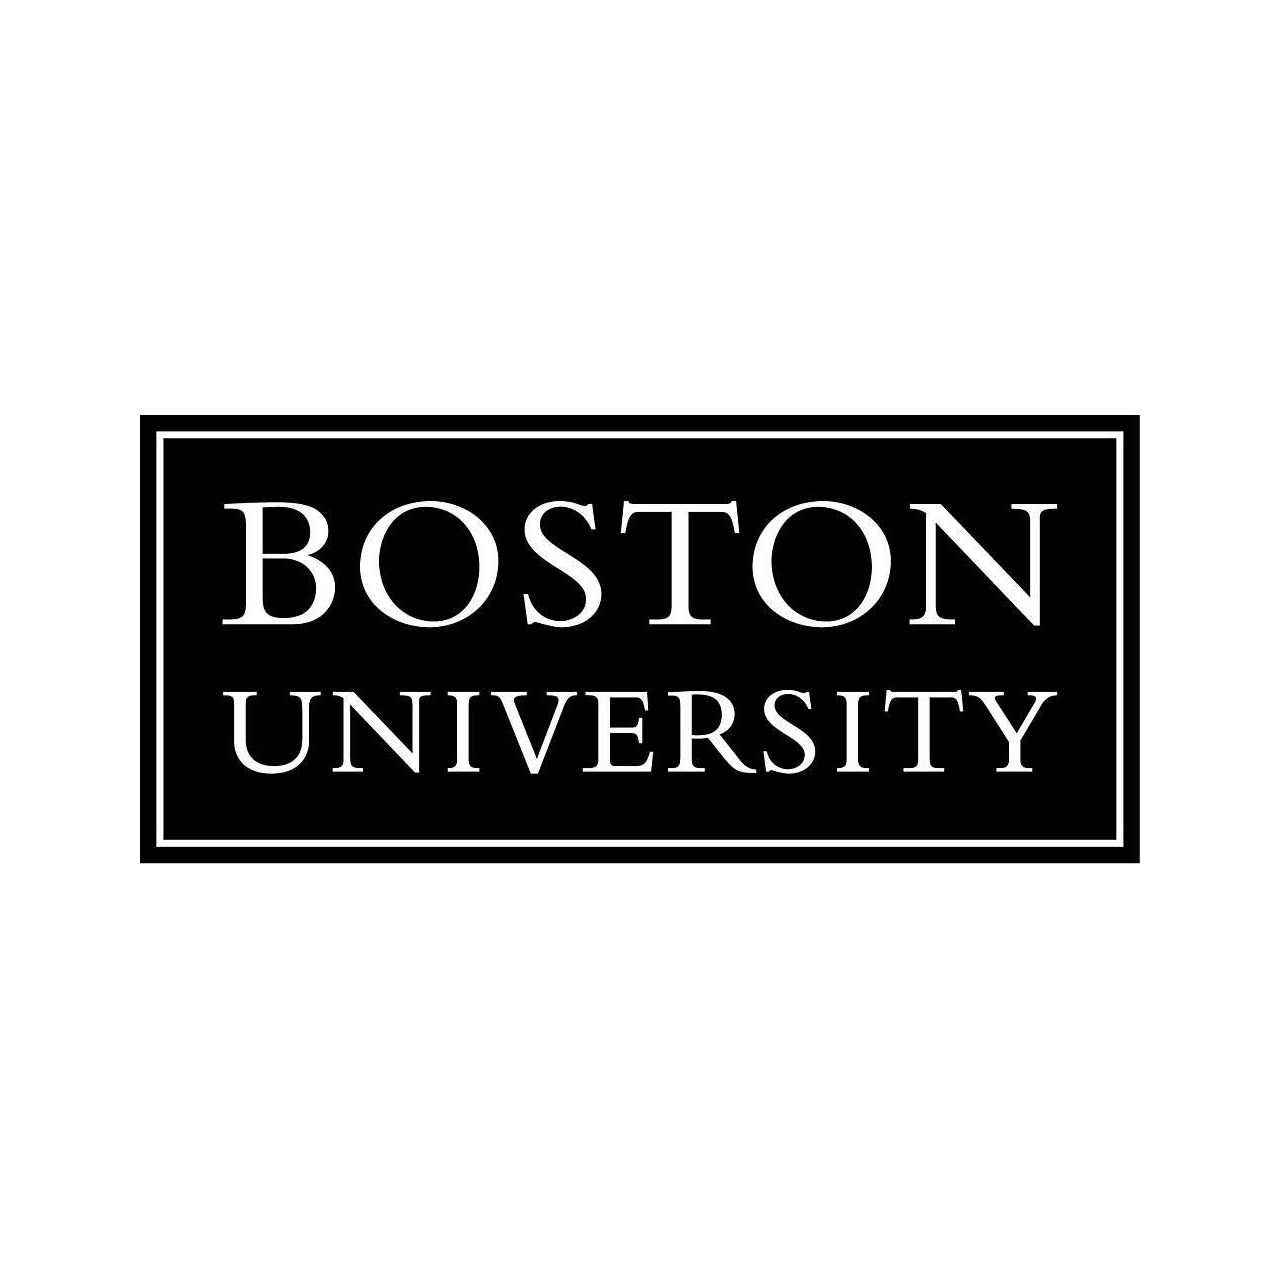 Kristin Baumann's client Boston University